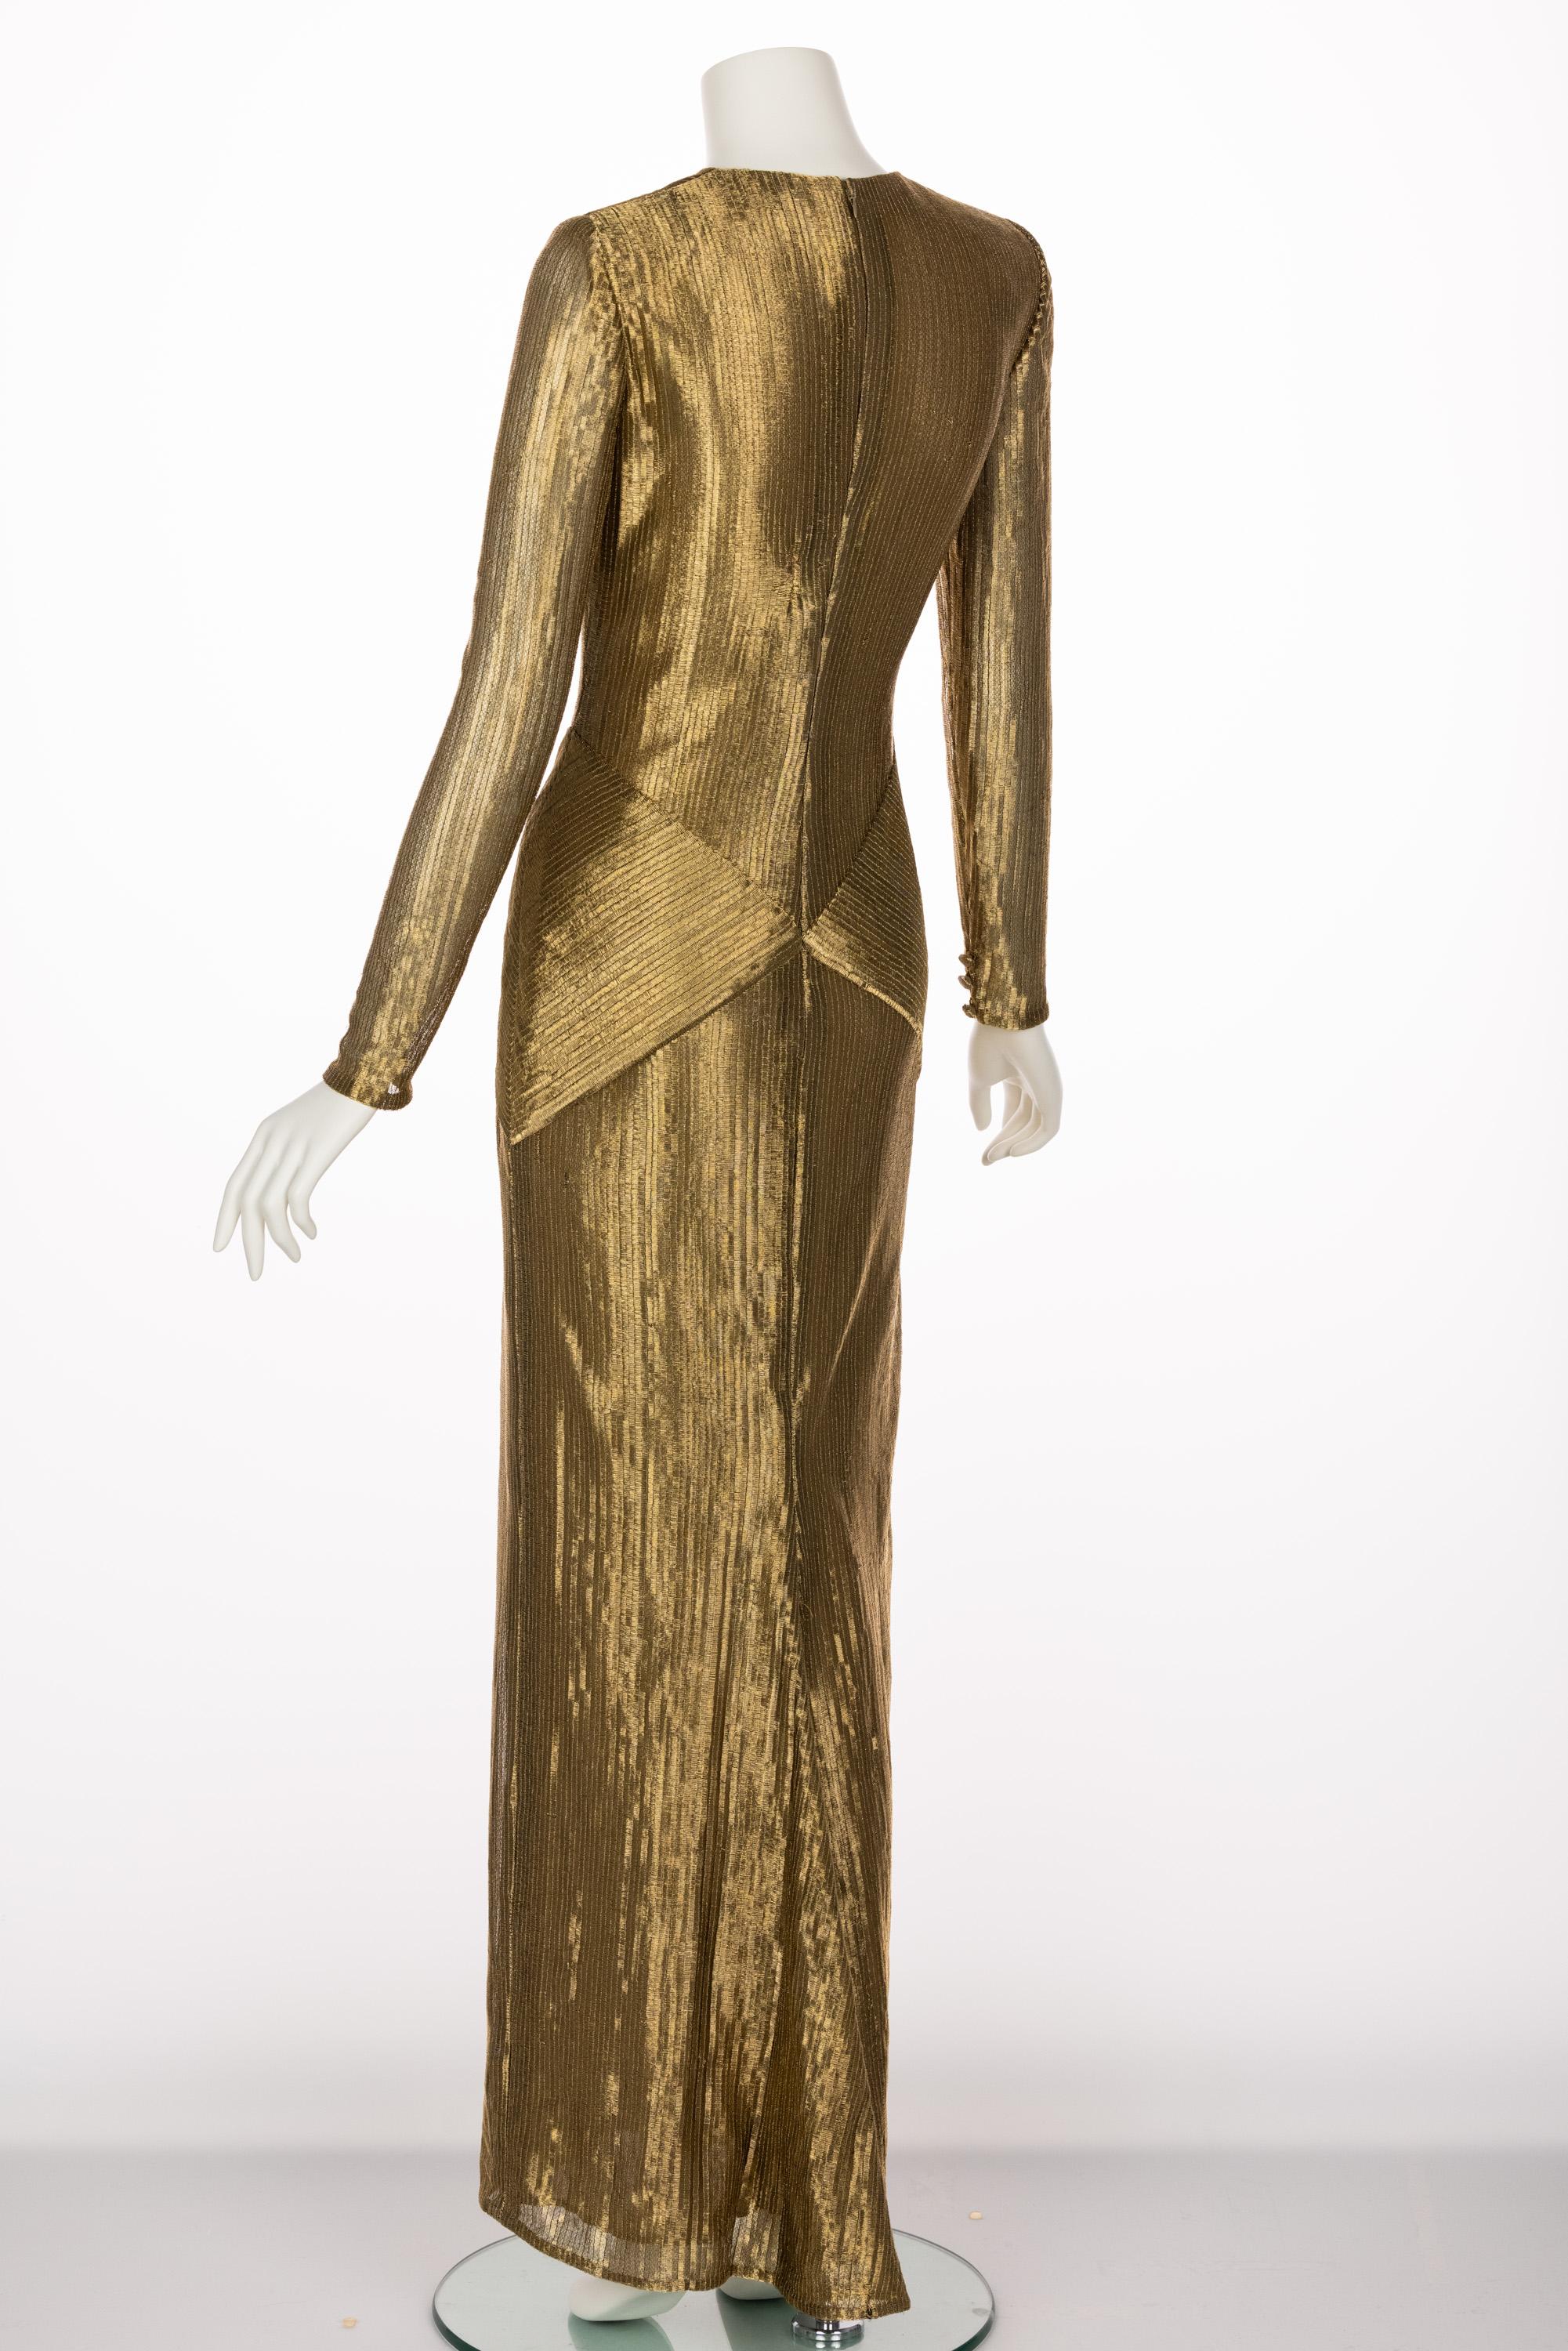 gold fishtail dress